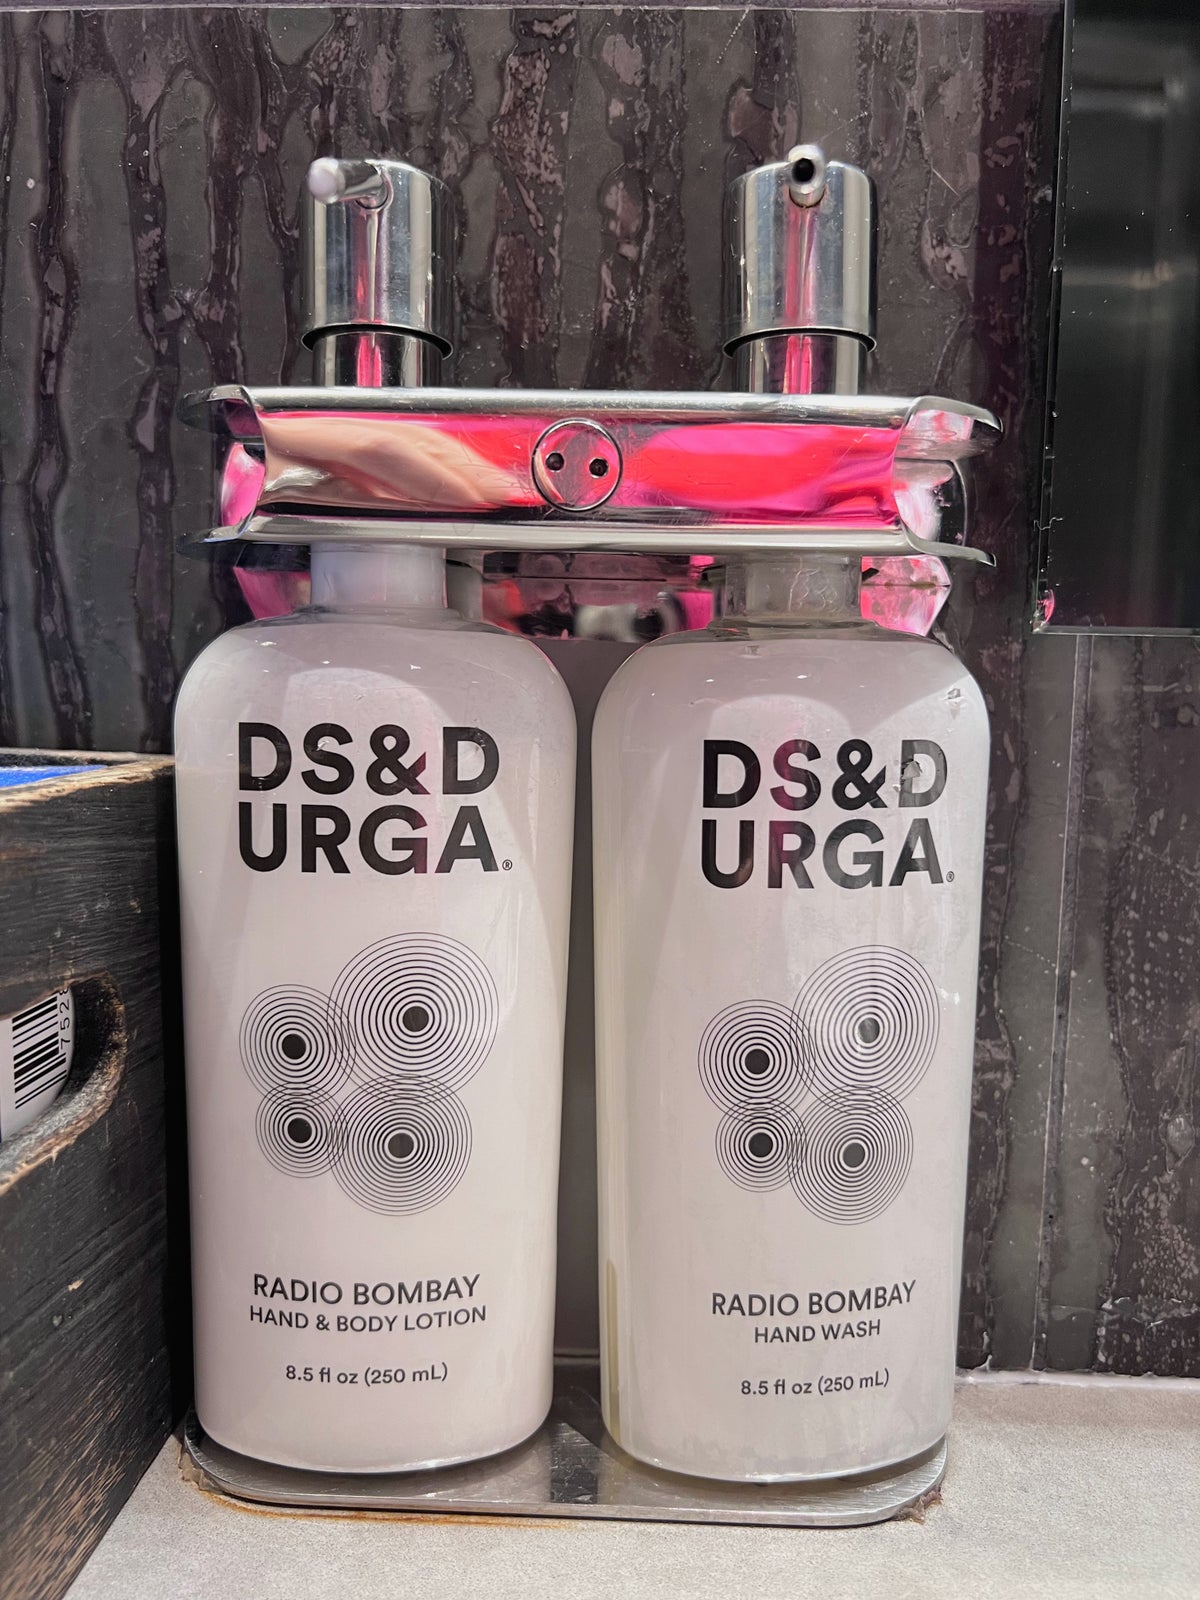 DSDURGA products in Admirals Club bathroom